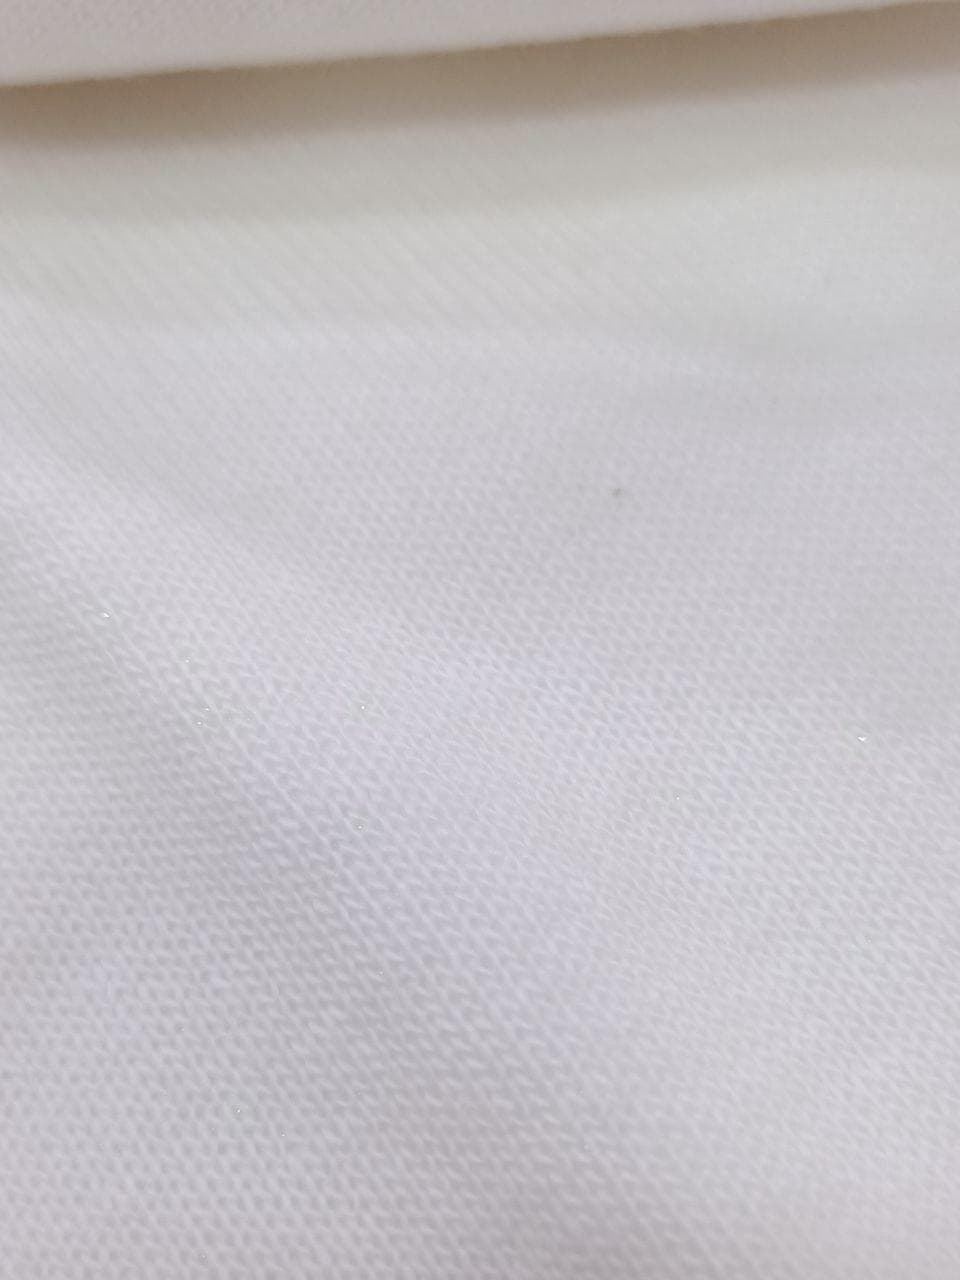 Funda almohada algodón impermeable - Imagen 1